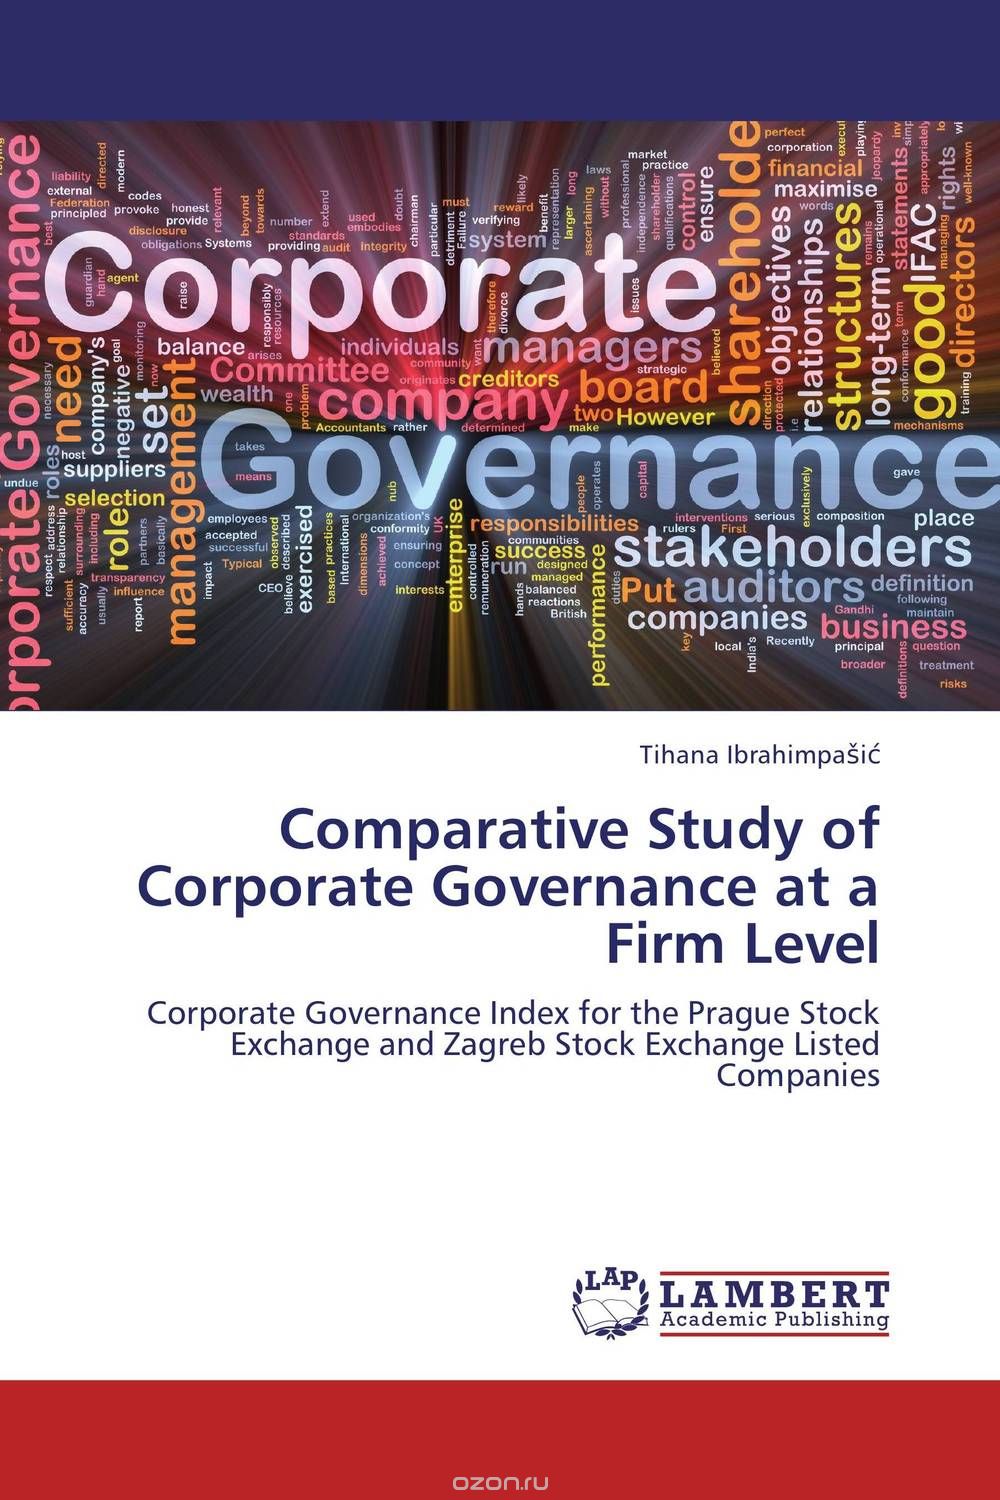 Скачать книгу "Comparative Study of Corporate Governance at a Firm Level"